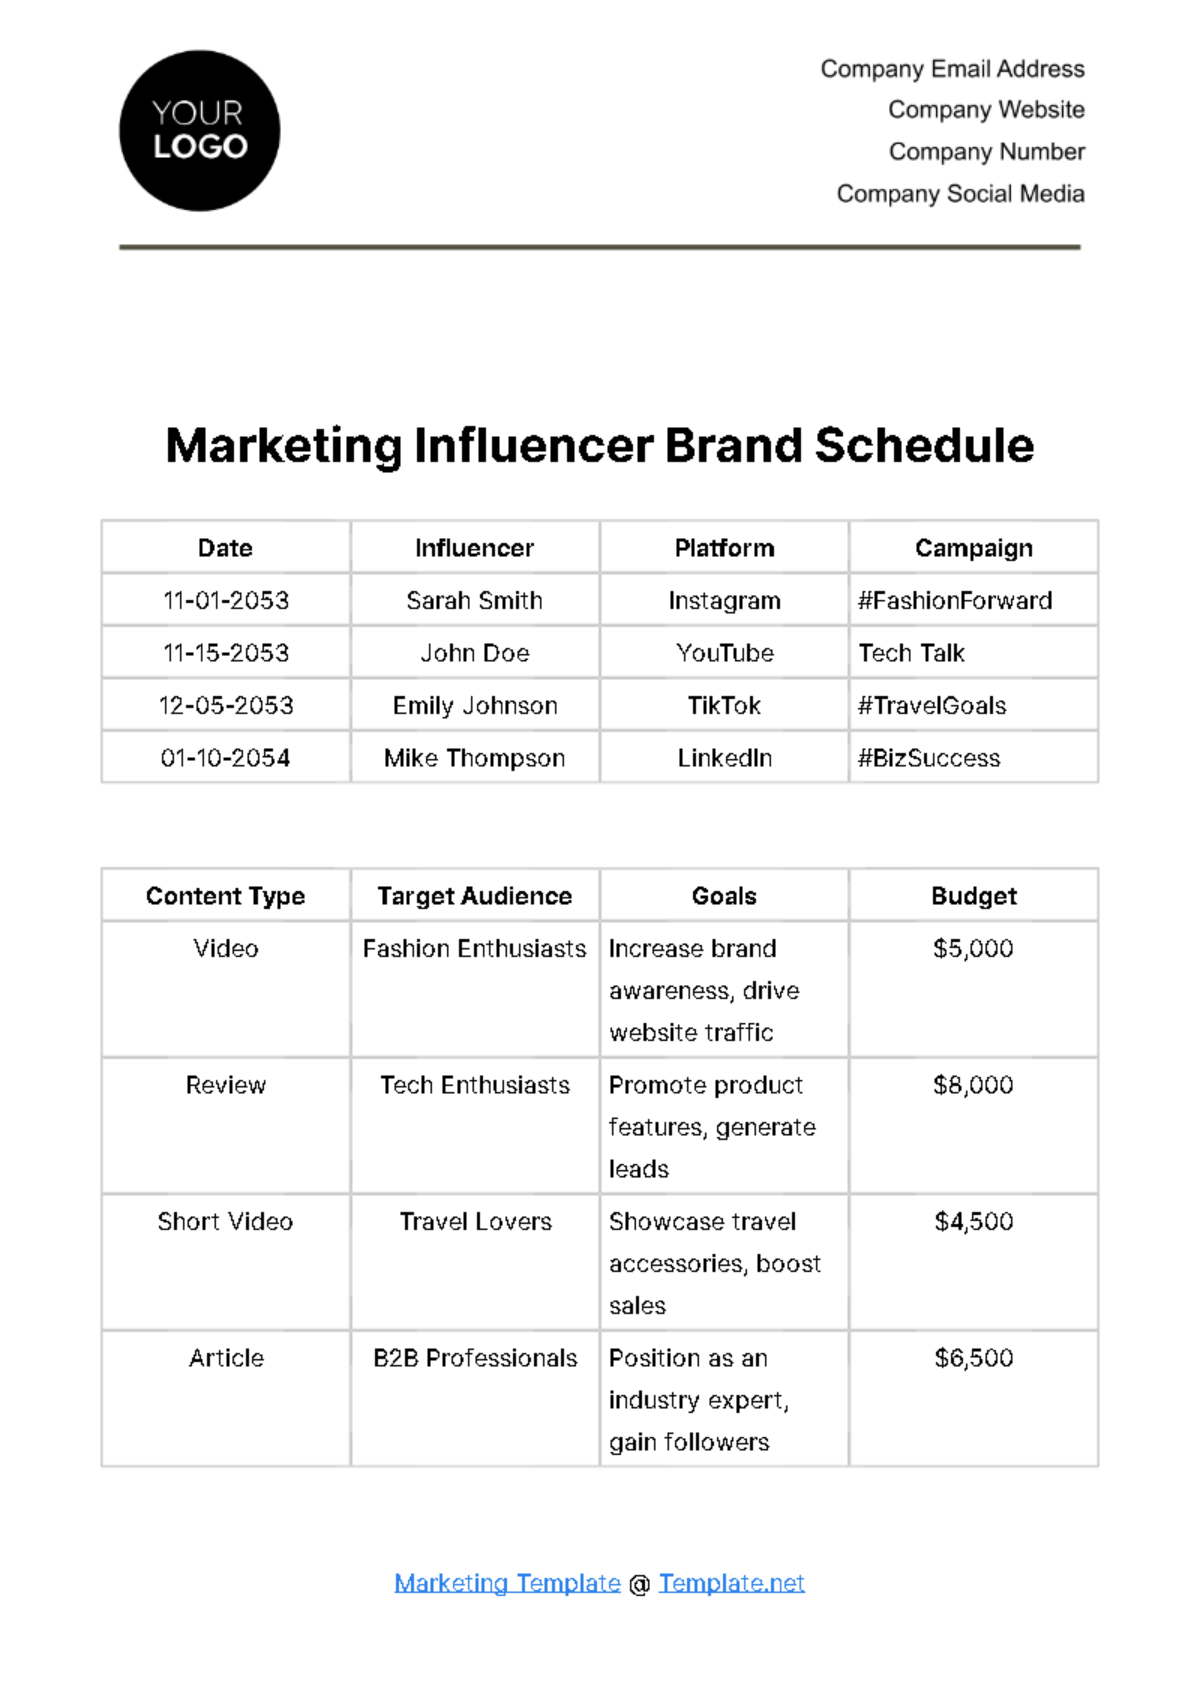 Free Marketing Influencer Brand Schedule Template